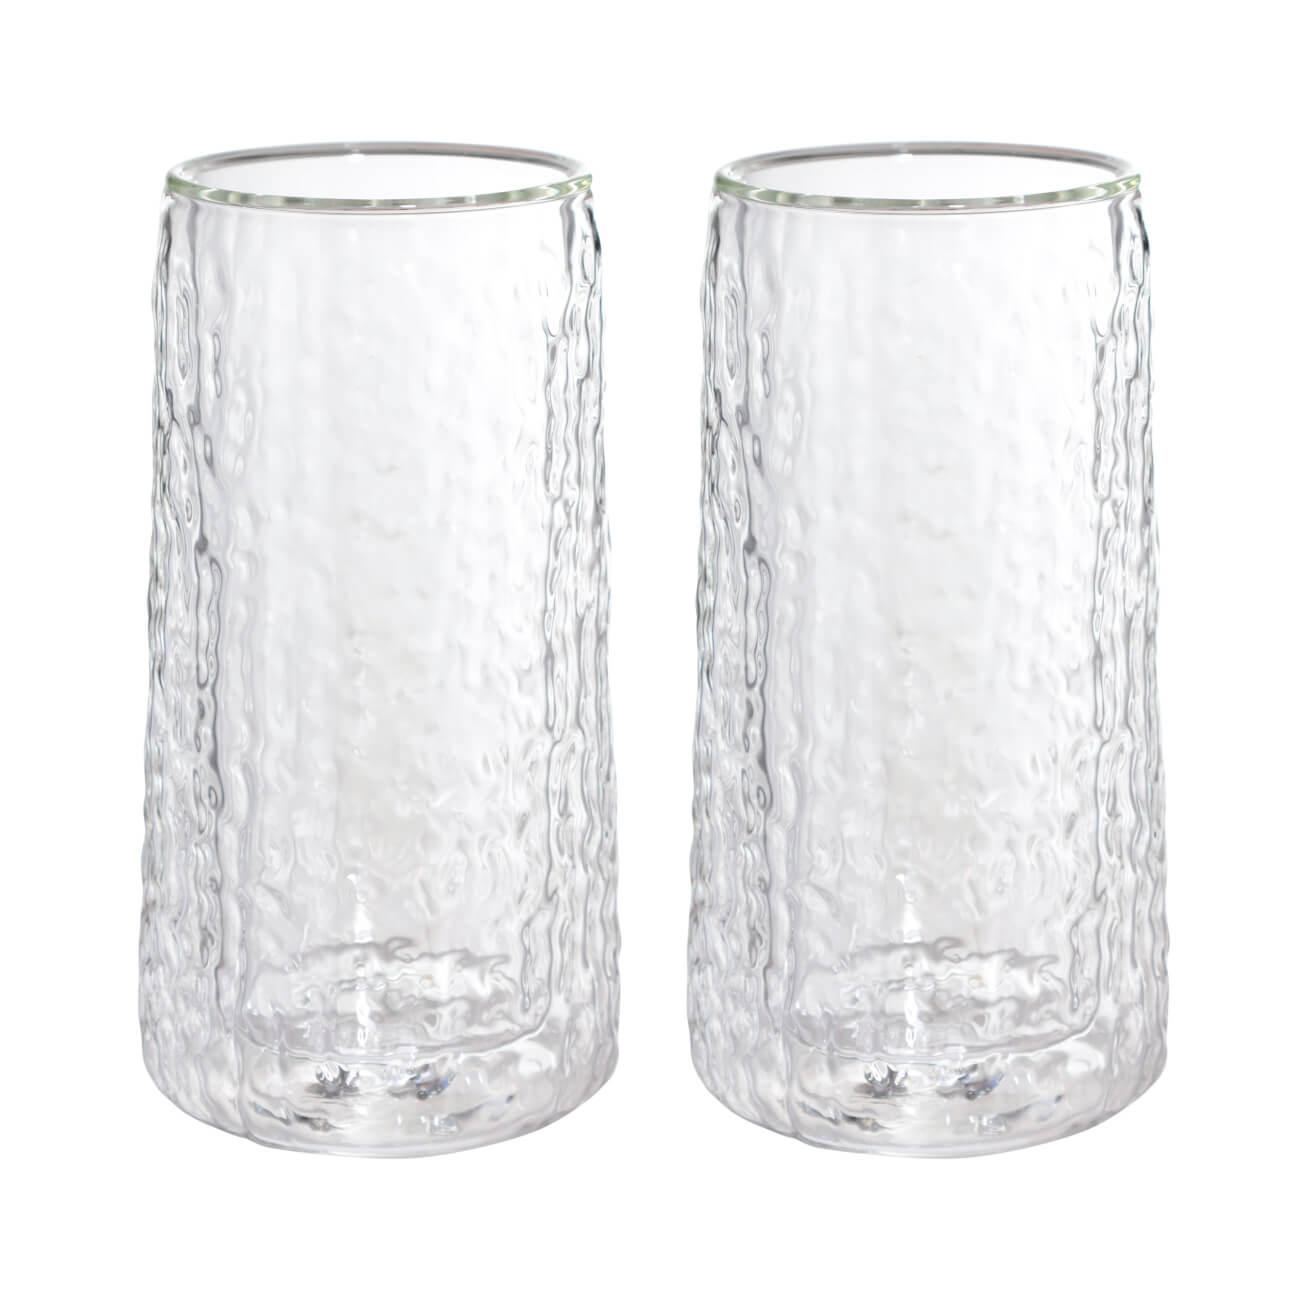 16490 fissman набор sencha из 2 х стаканов с двойными стенками 280мл жаропрочное стекло Стакан, 320 мл, 2 шт, стекло Б, Air ripply